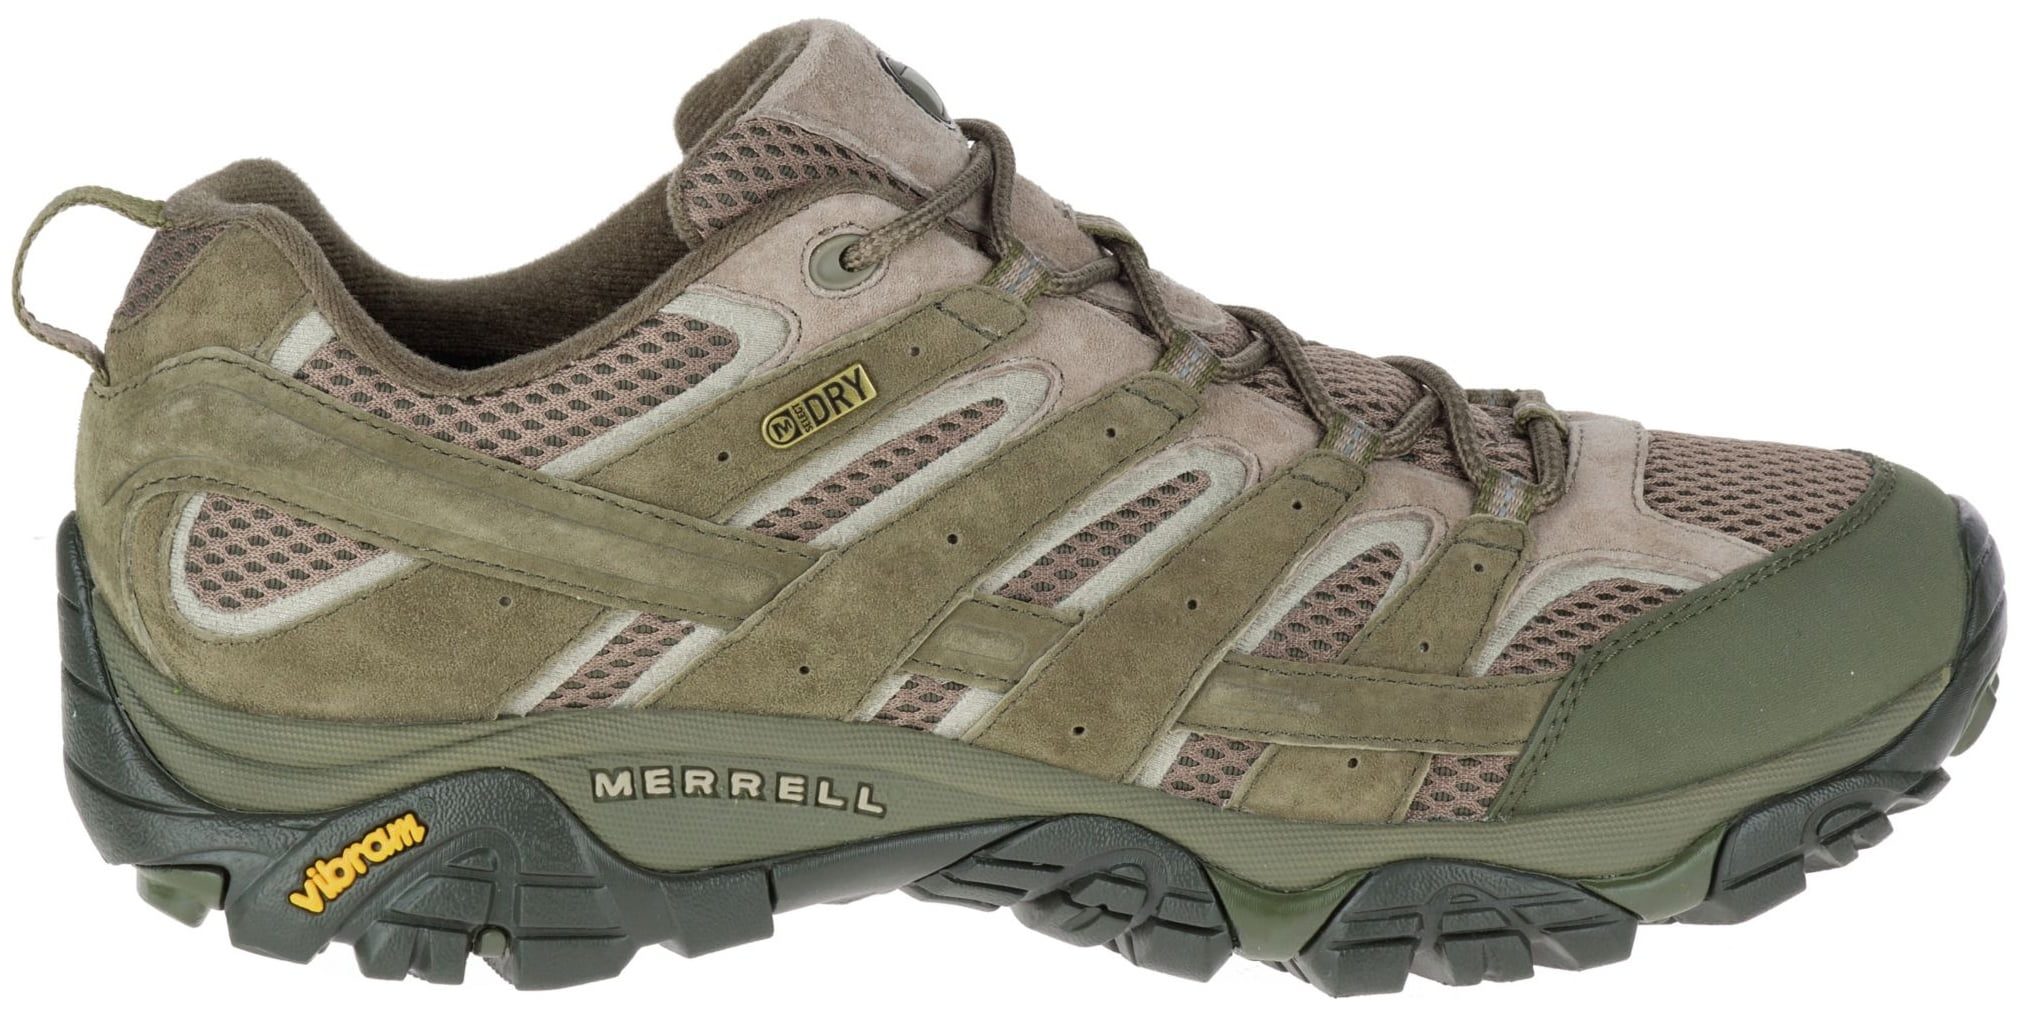 Merrell Men's Moab 2 Waterproof Hiking Shoes (Dusty Olive, 10.0 ...